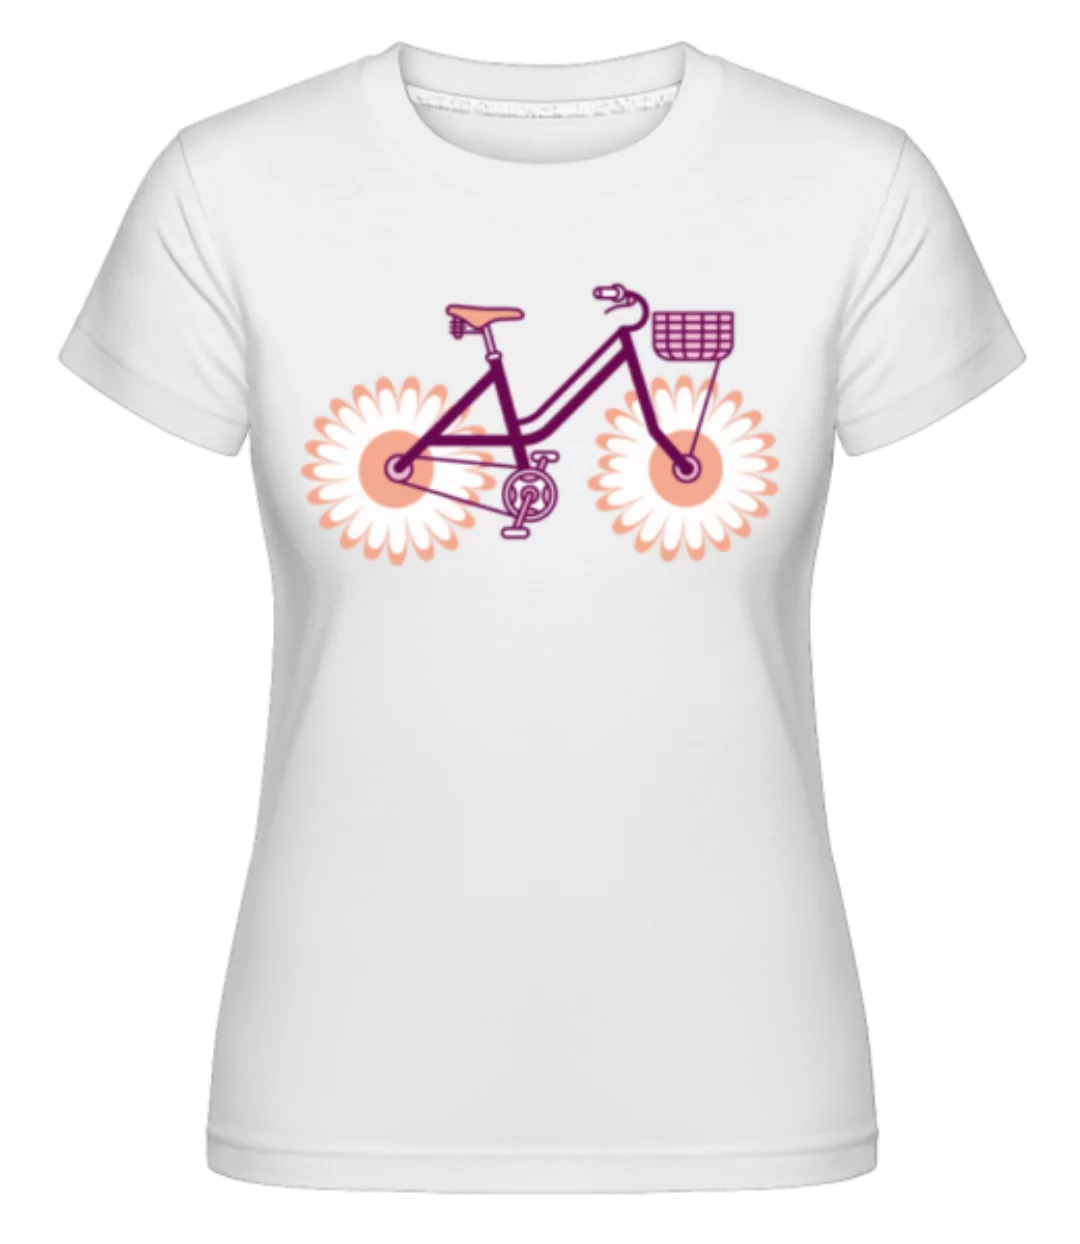 Fahrrad · Shirtinator Frauen T-Shirt günstig online kaufen